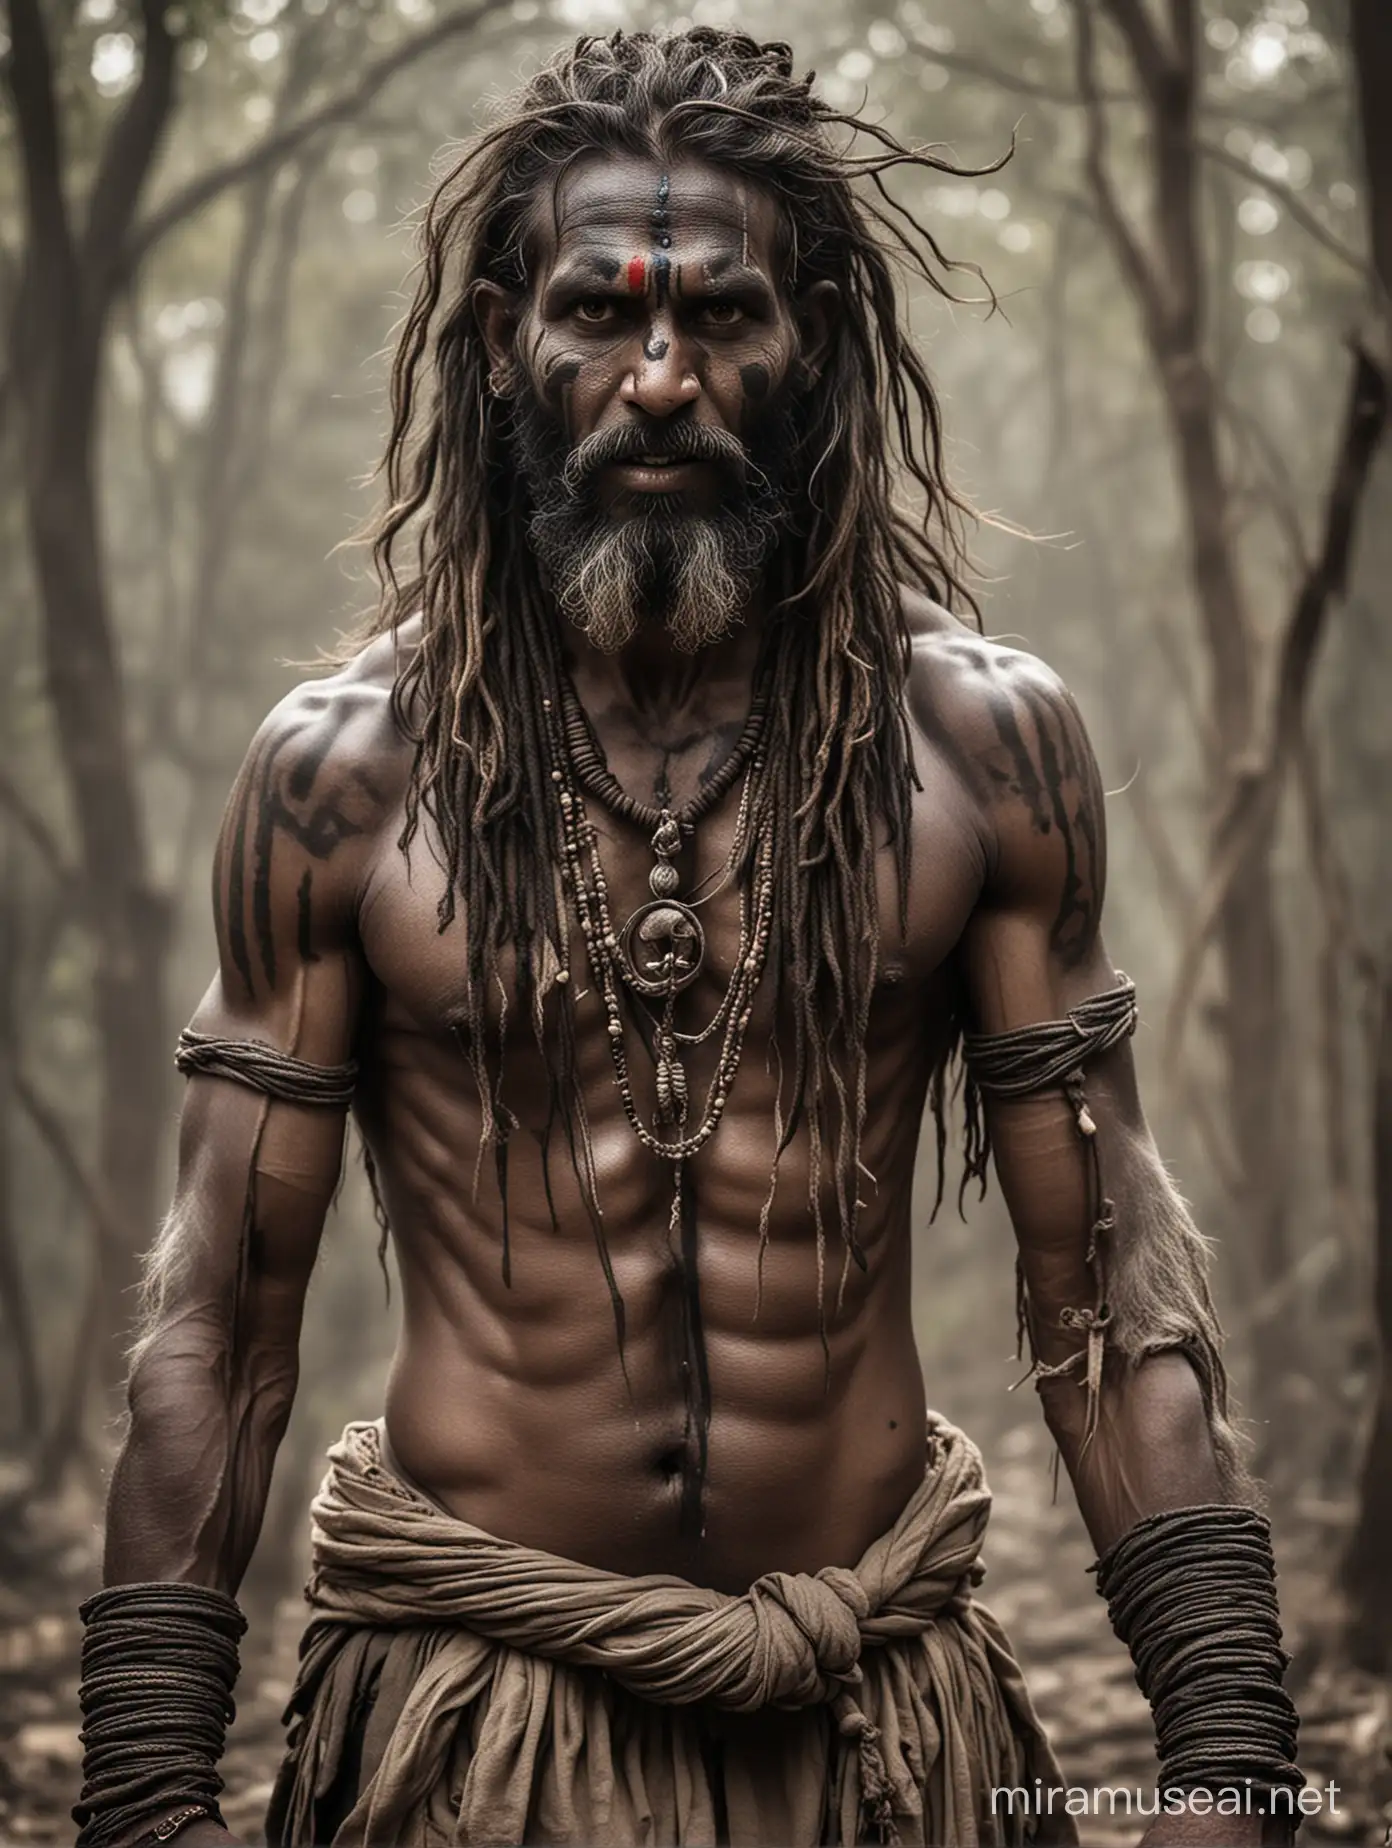 a furious ancient indian aghori warrior that will restore the faith in humanity & establish "AKHANDA BHARAT"